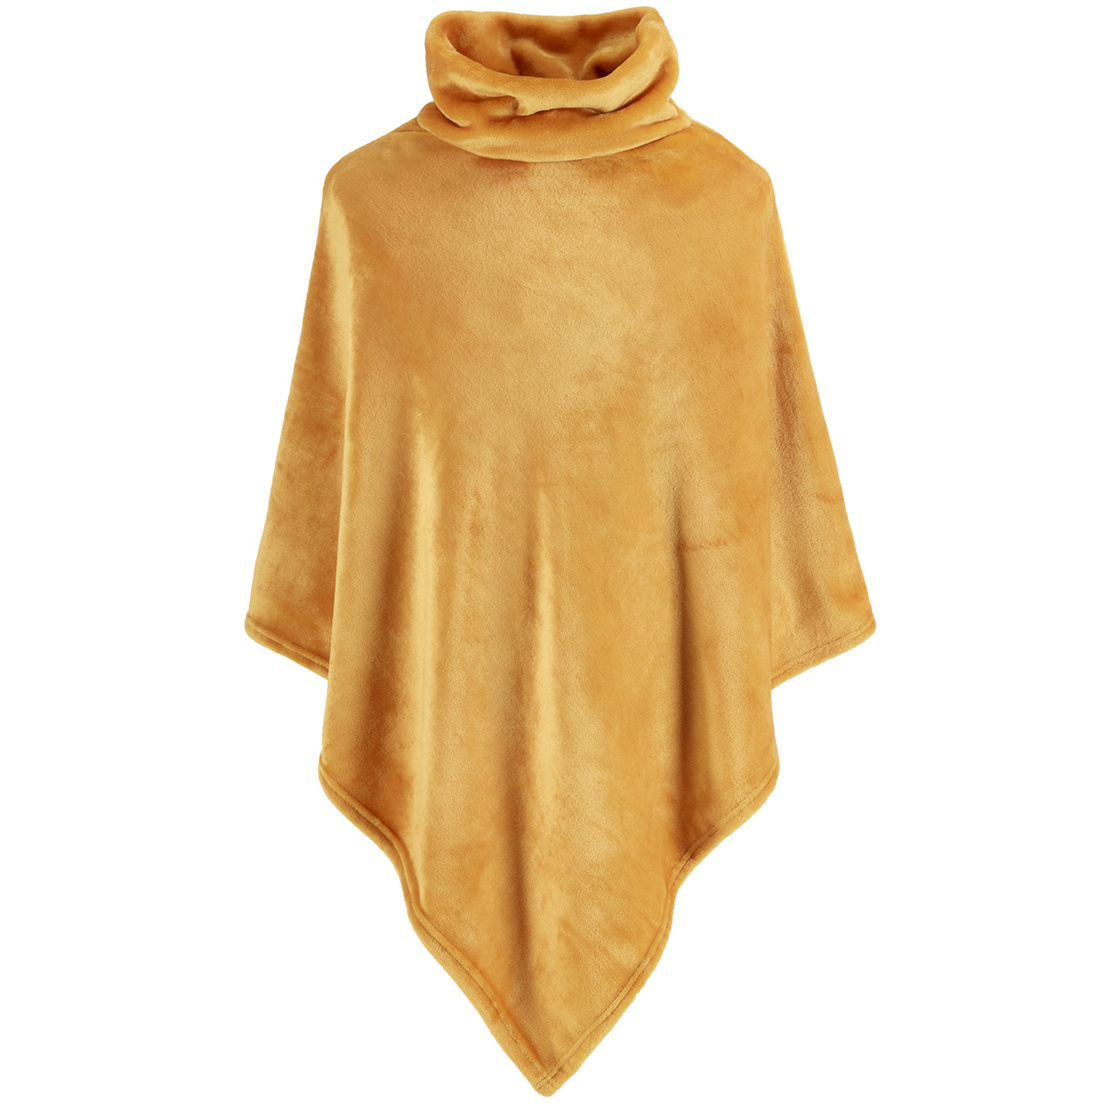 Moodit Poncho Fleece, Gold Yellow - 80 x 80 cm - Polyester